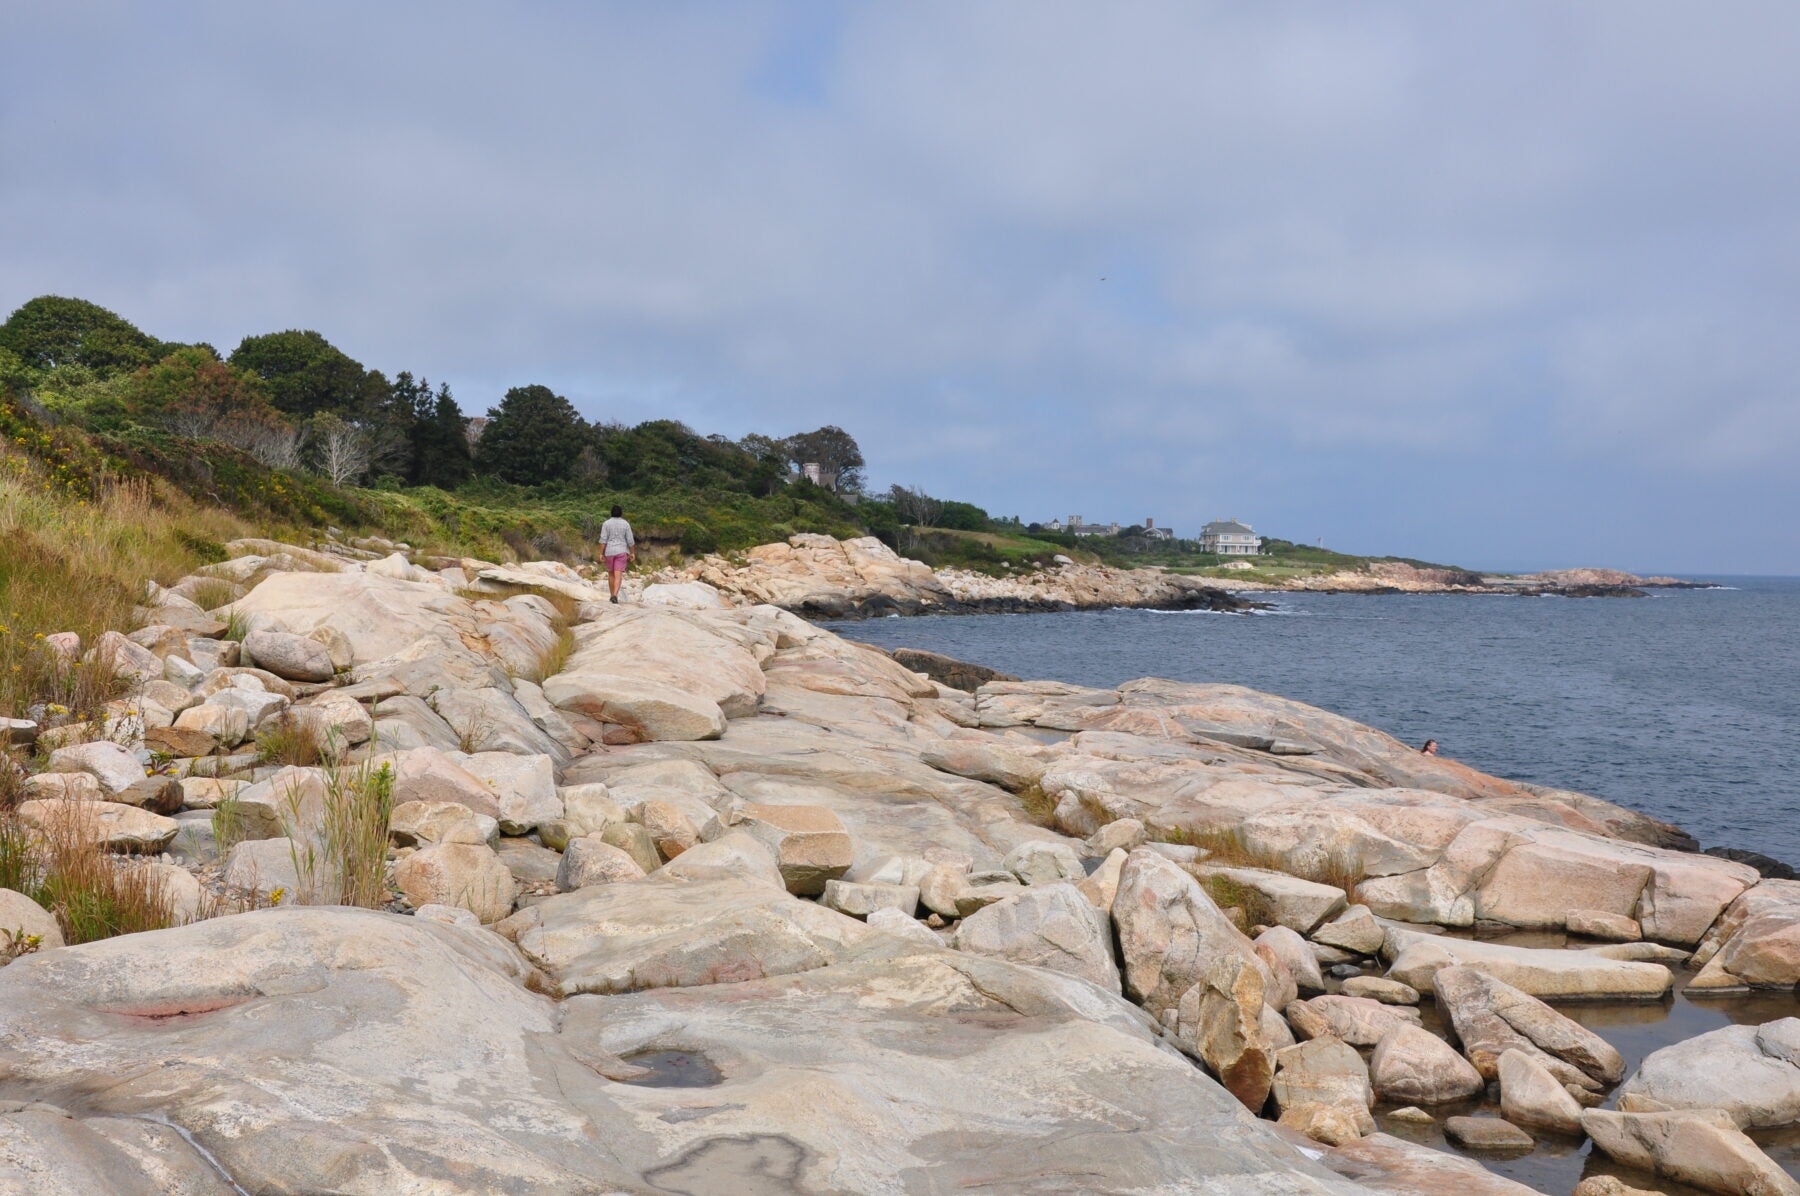 The rocky coastline of Black Point at Narragansett Bay in Rhode Island